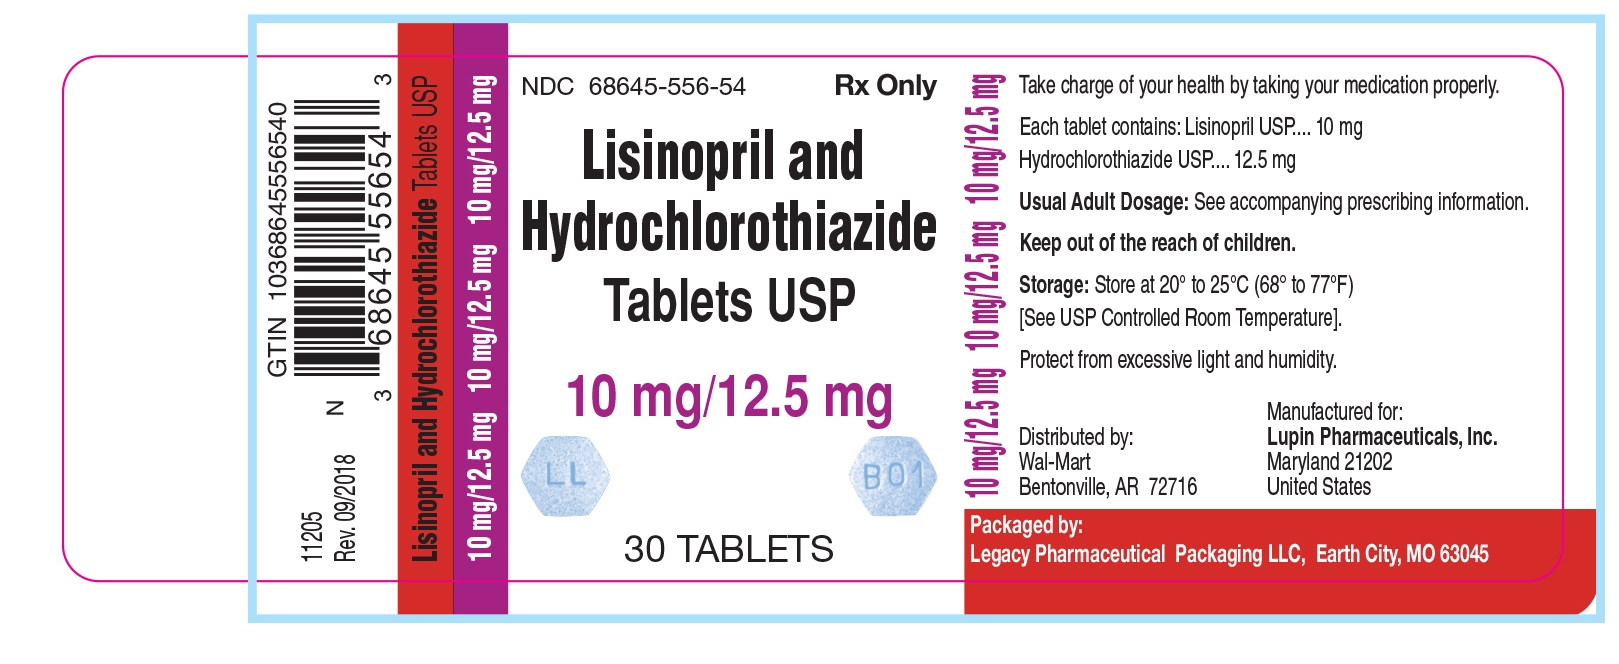 Lisinopril and Hydrochlorothiazide Tablets, USP 10 mg/12.5 mg